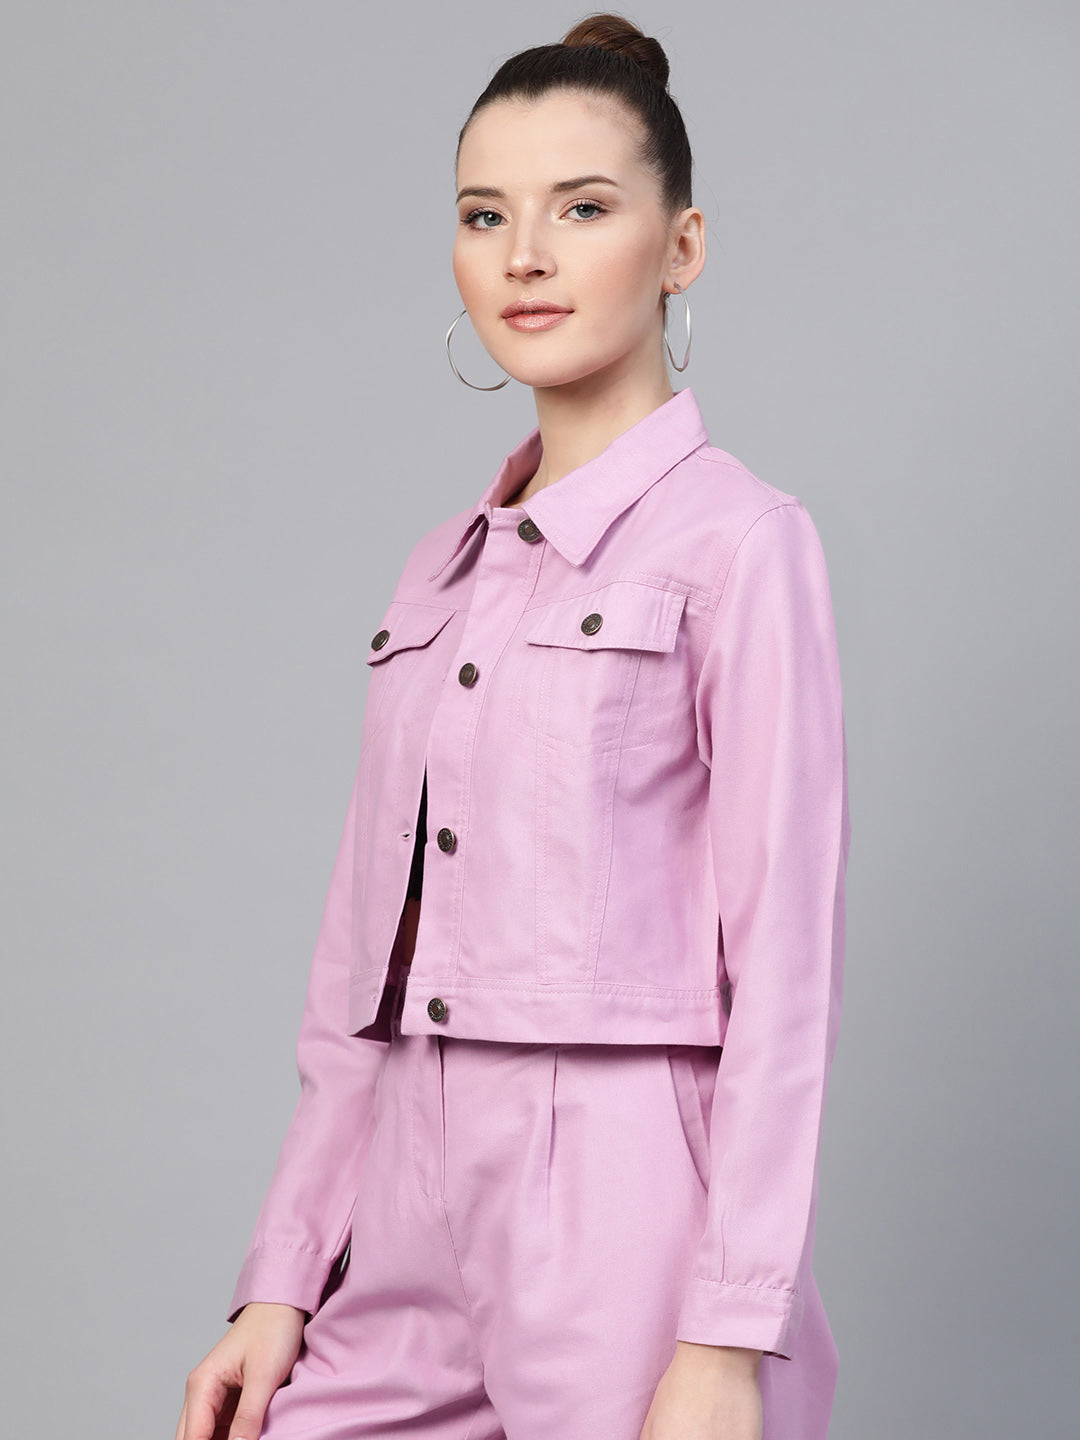 Buy Women Lavender Denim Jacket Online At Best Price 